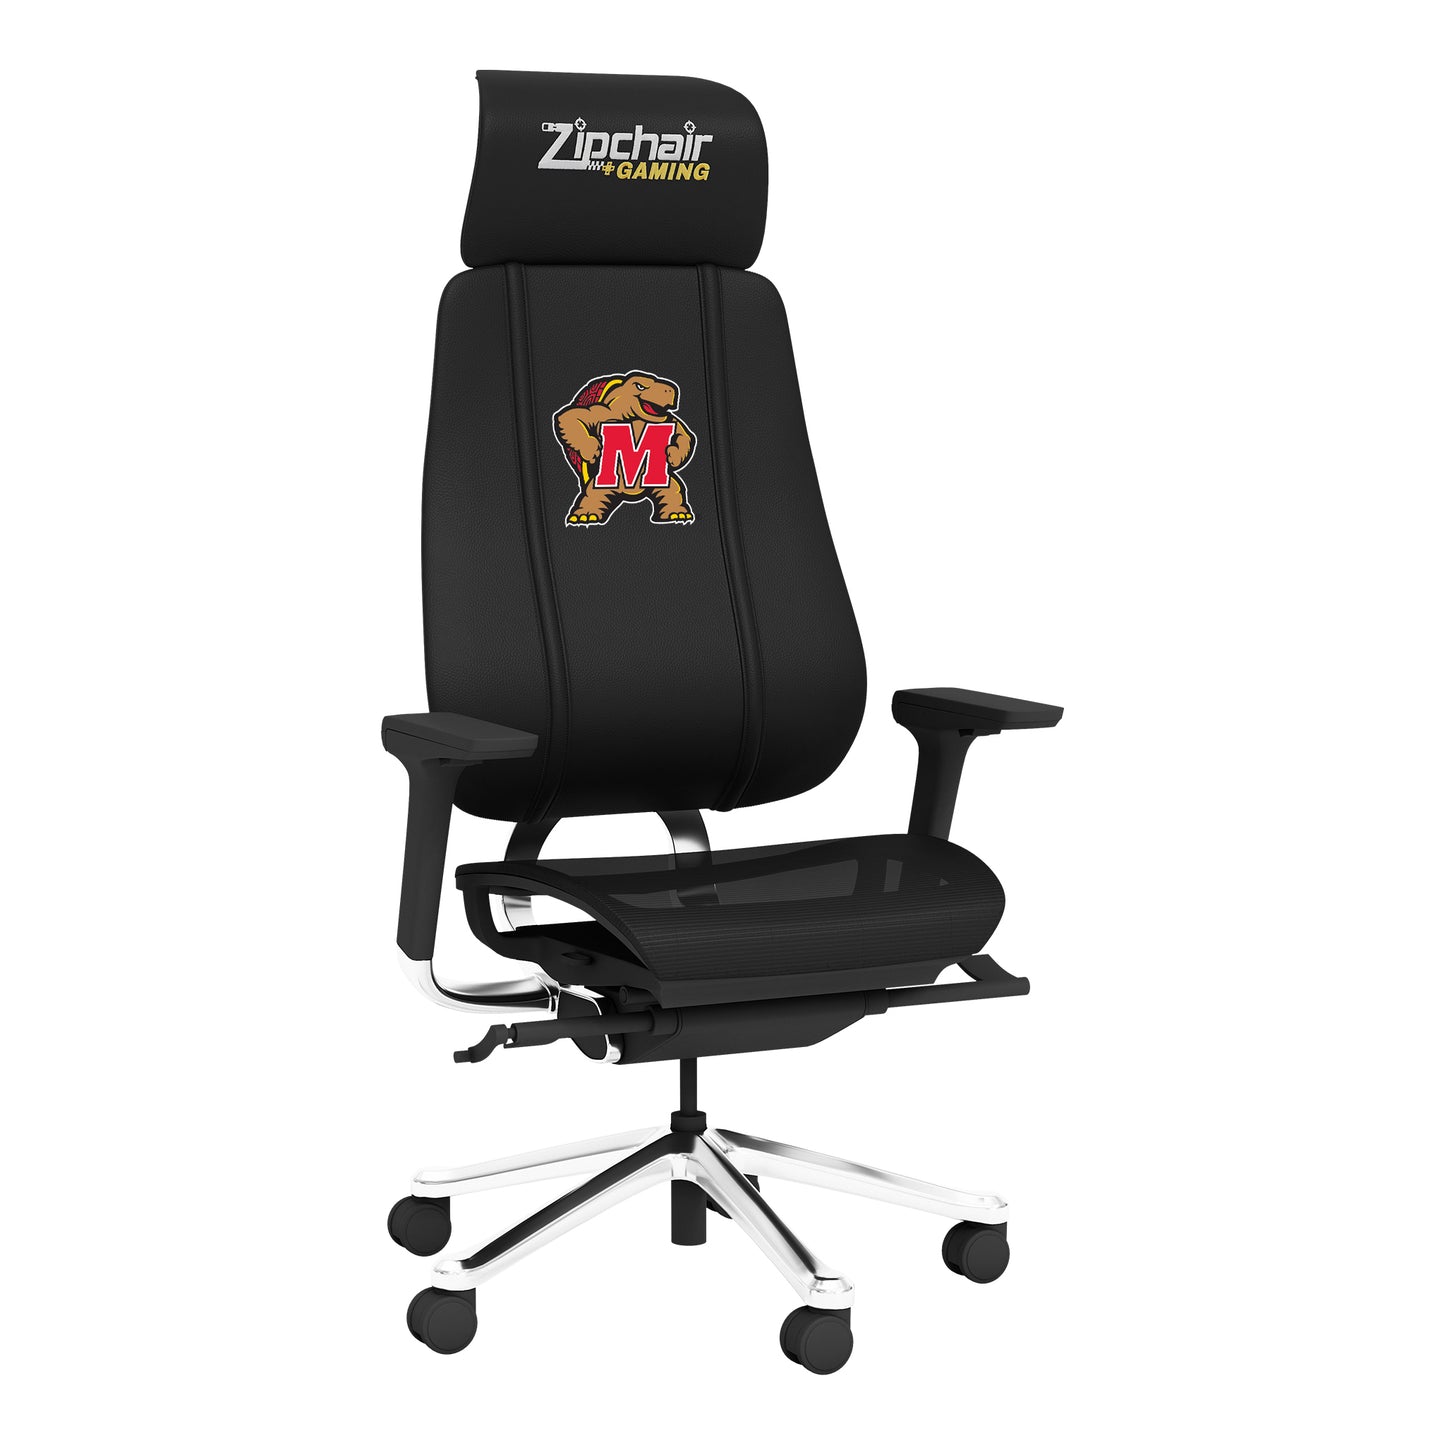 PhantomX Gaming Chair with Maryland Terrapins Logo